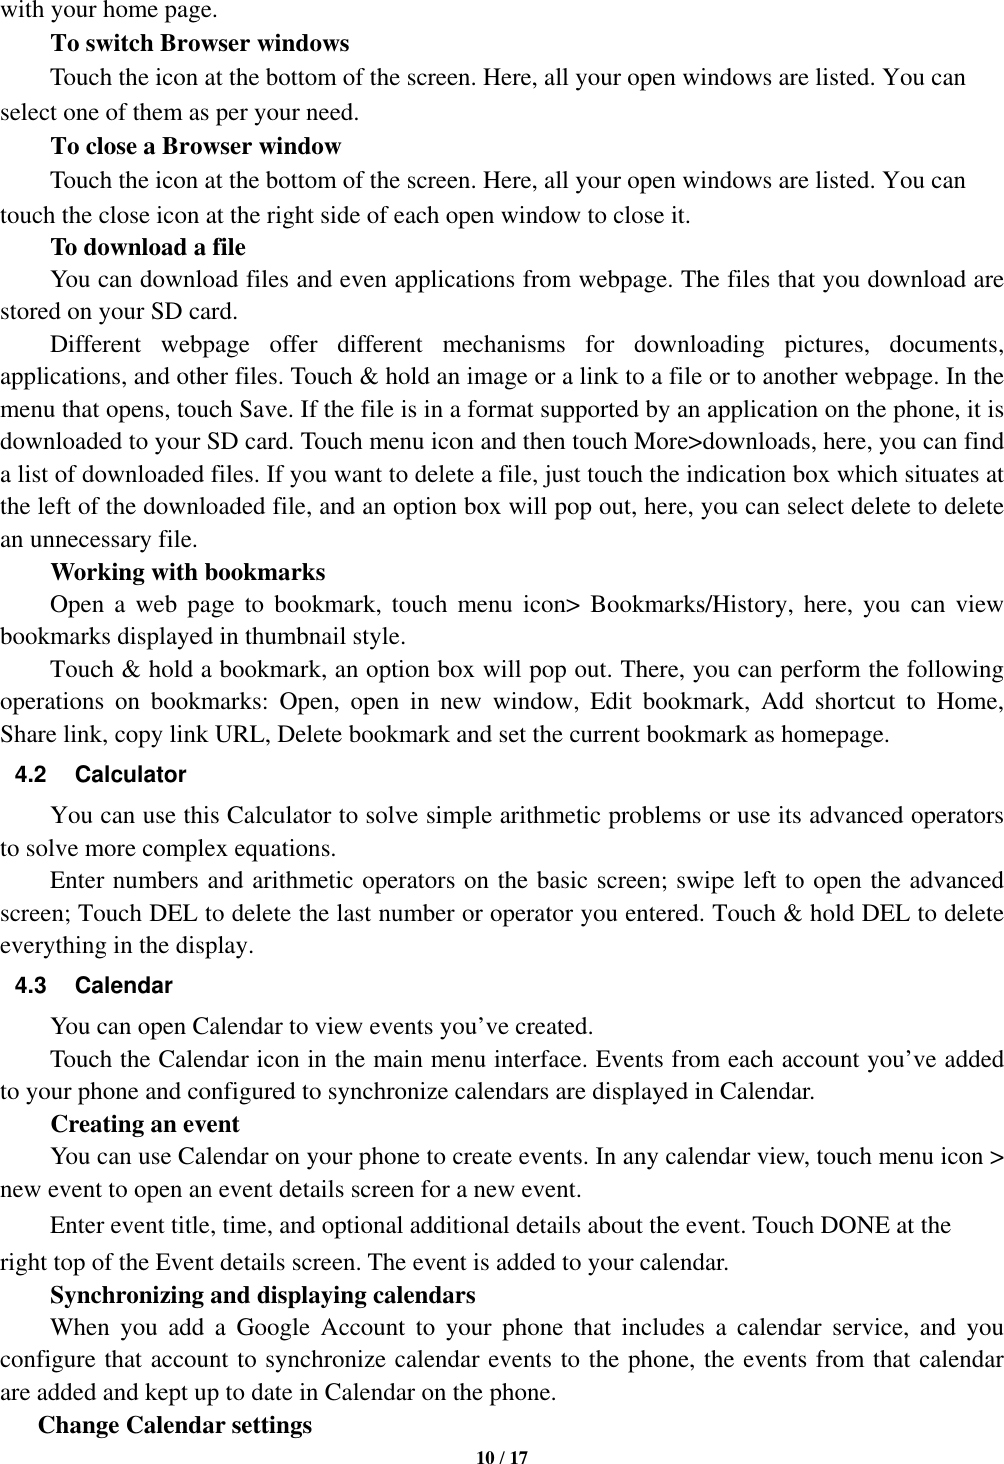 Page 10 of Sky Phone SKYELITEA55 4G Smart Phone User Manual